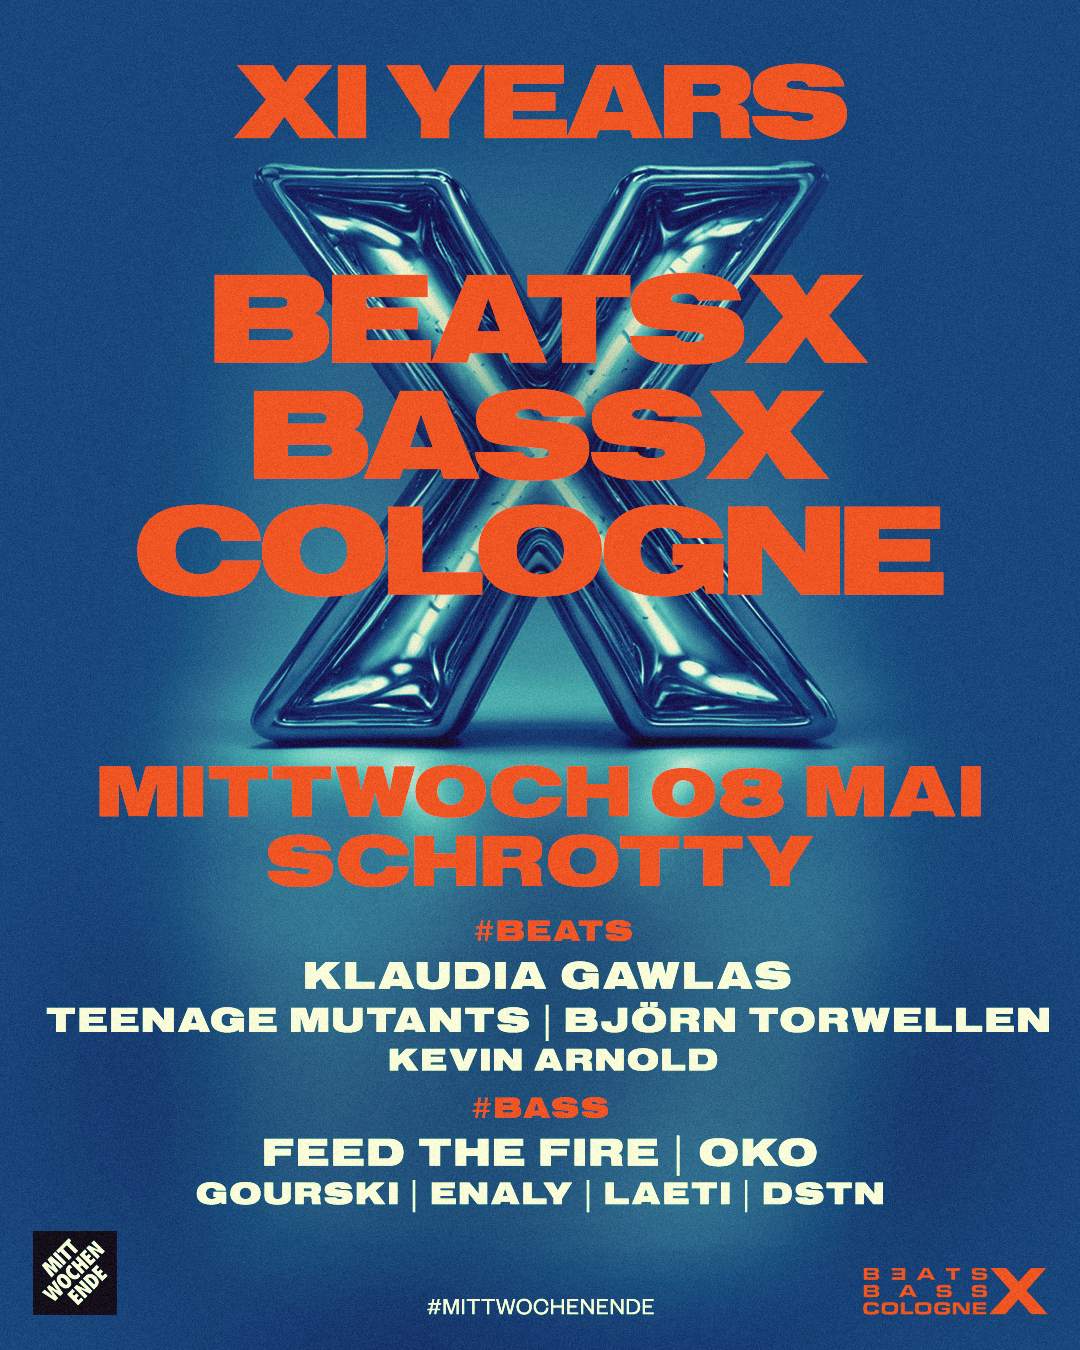 11 Years Beats x Bass x Cologne with Klaudia Gawlas, Teenage Mutants, Feed the Fire, OKO - フライヤー表